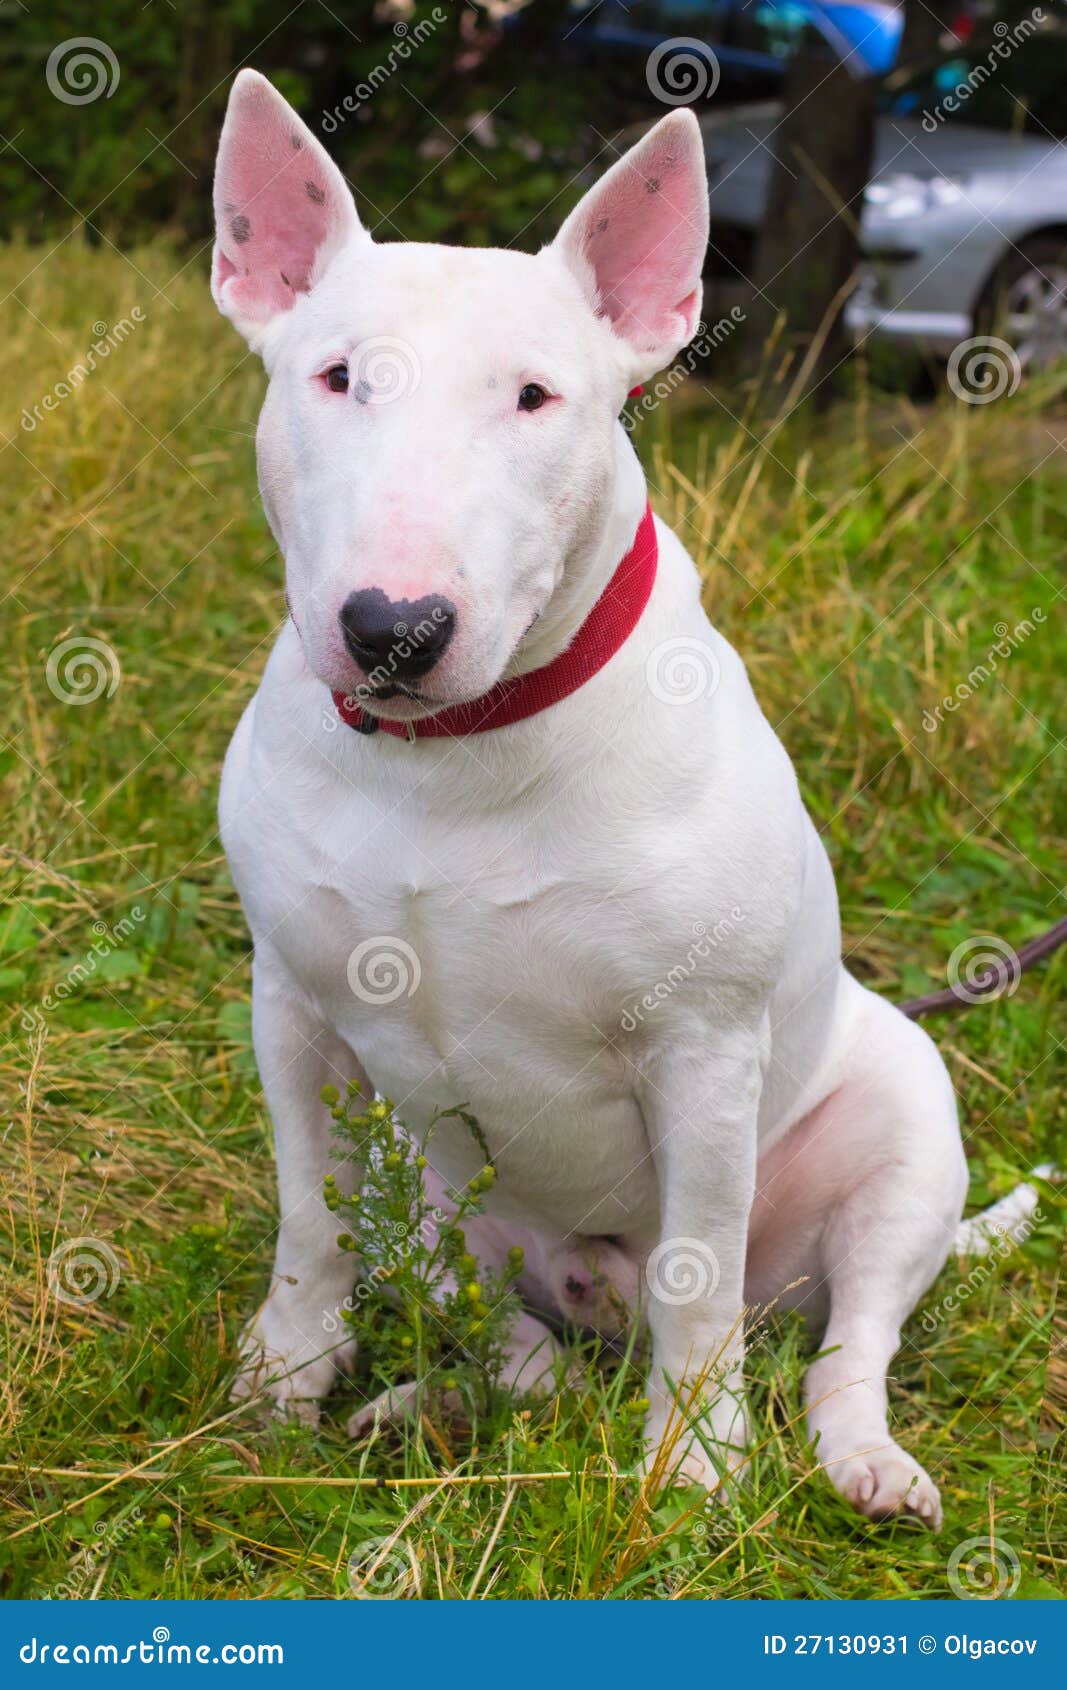 Bull Terrier Dog Breed Stock Image - Image: 27130931